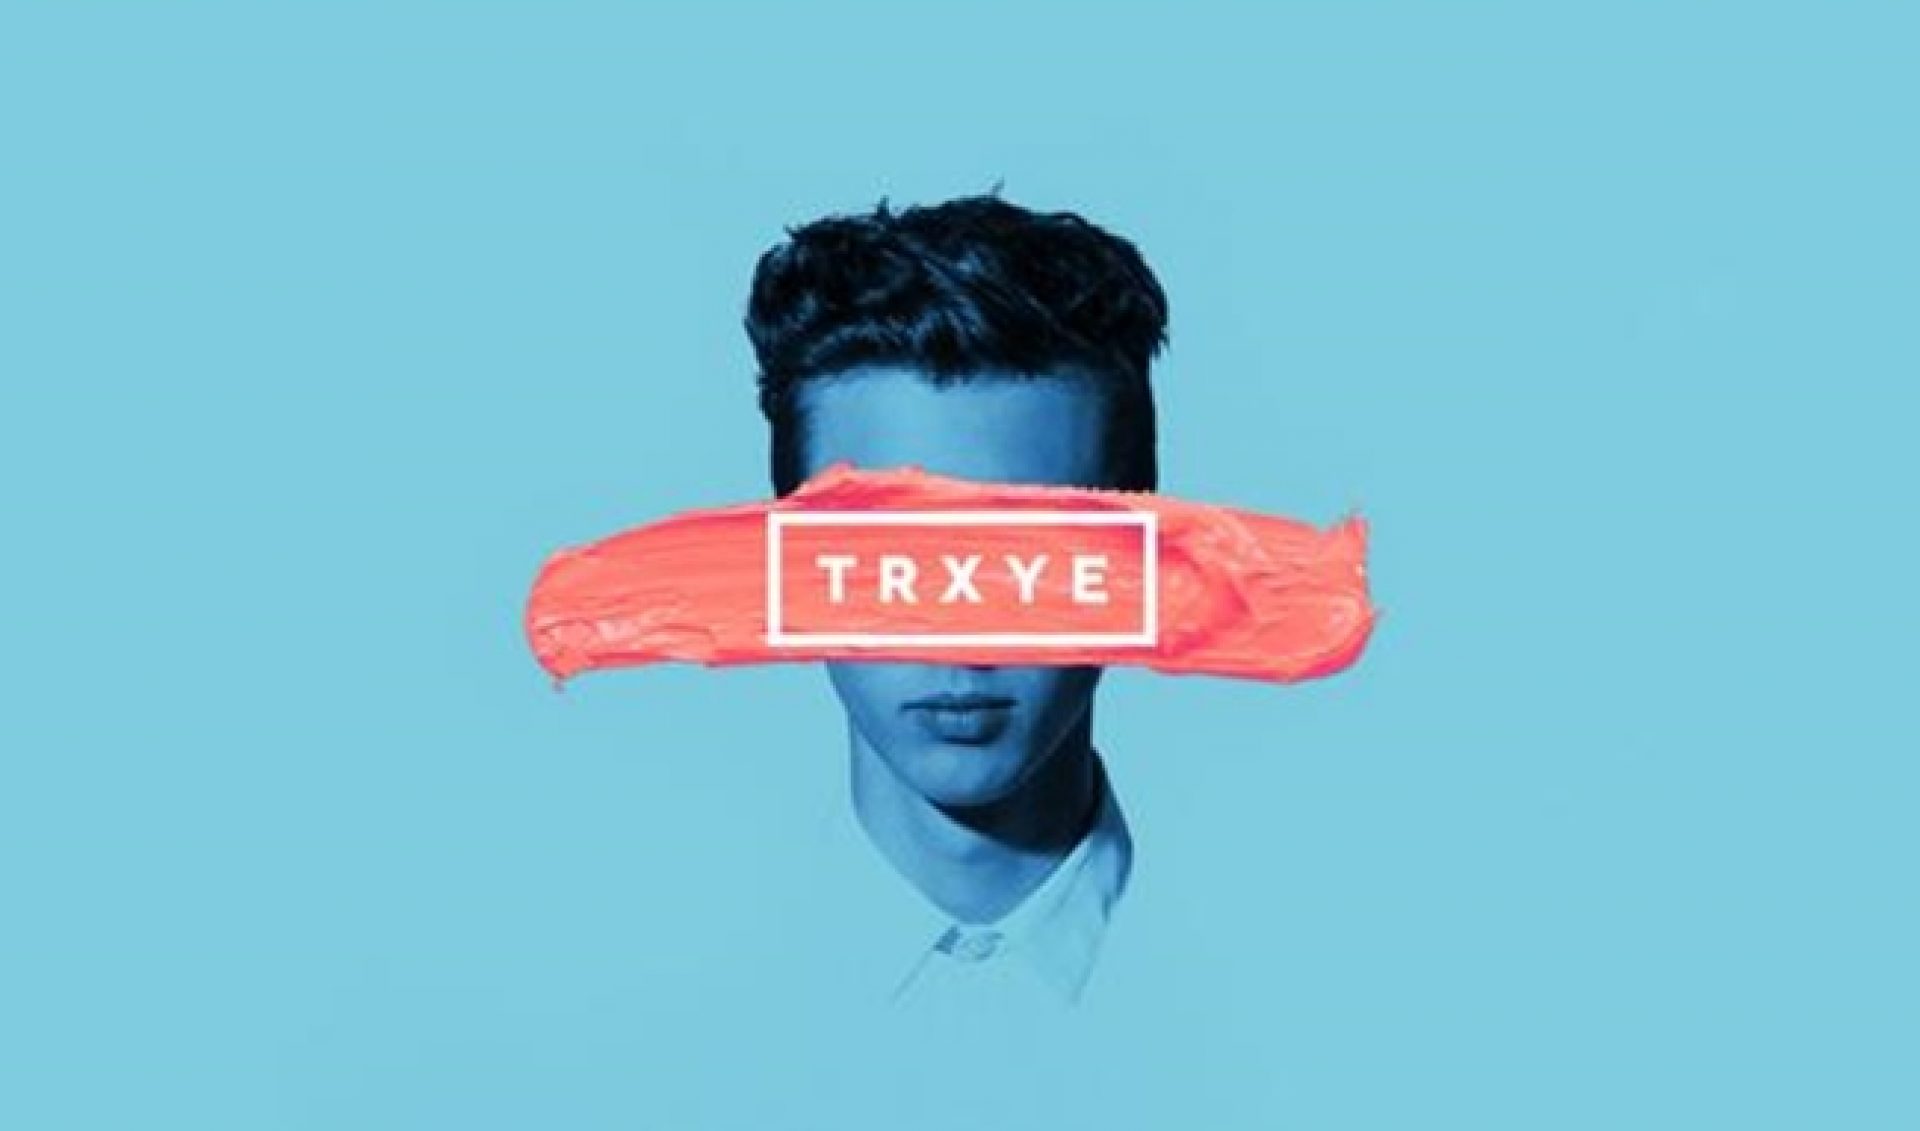 Troye Sivan’s Debut Single, “Happy Little Pill”, Draws Buzz